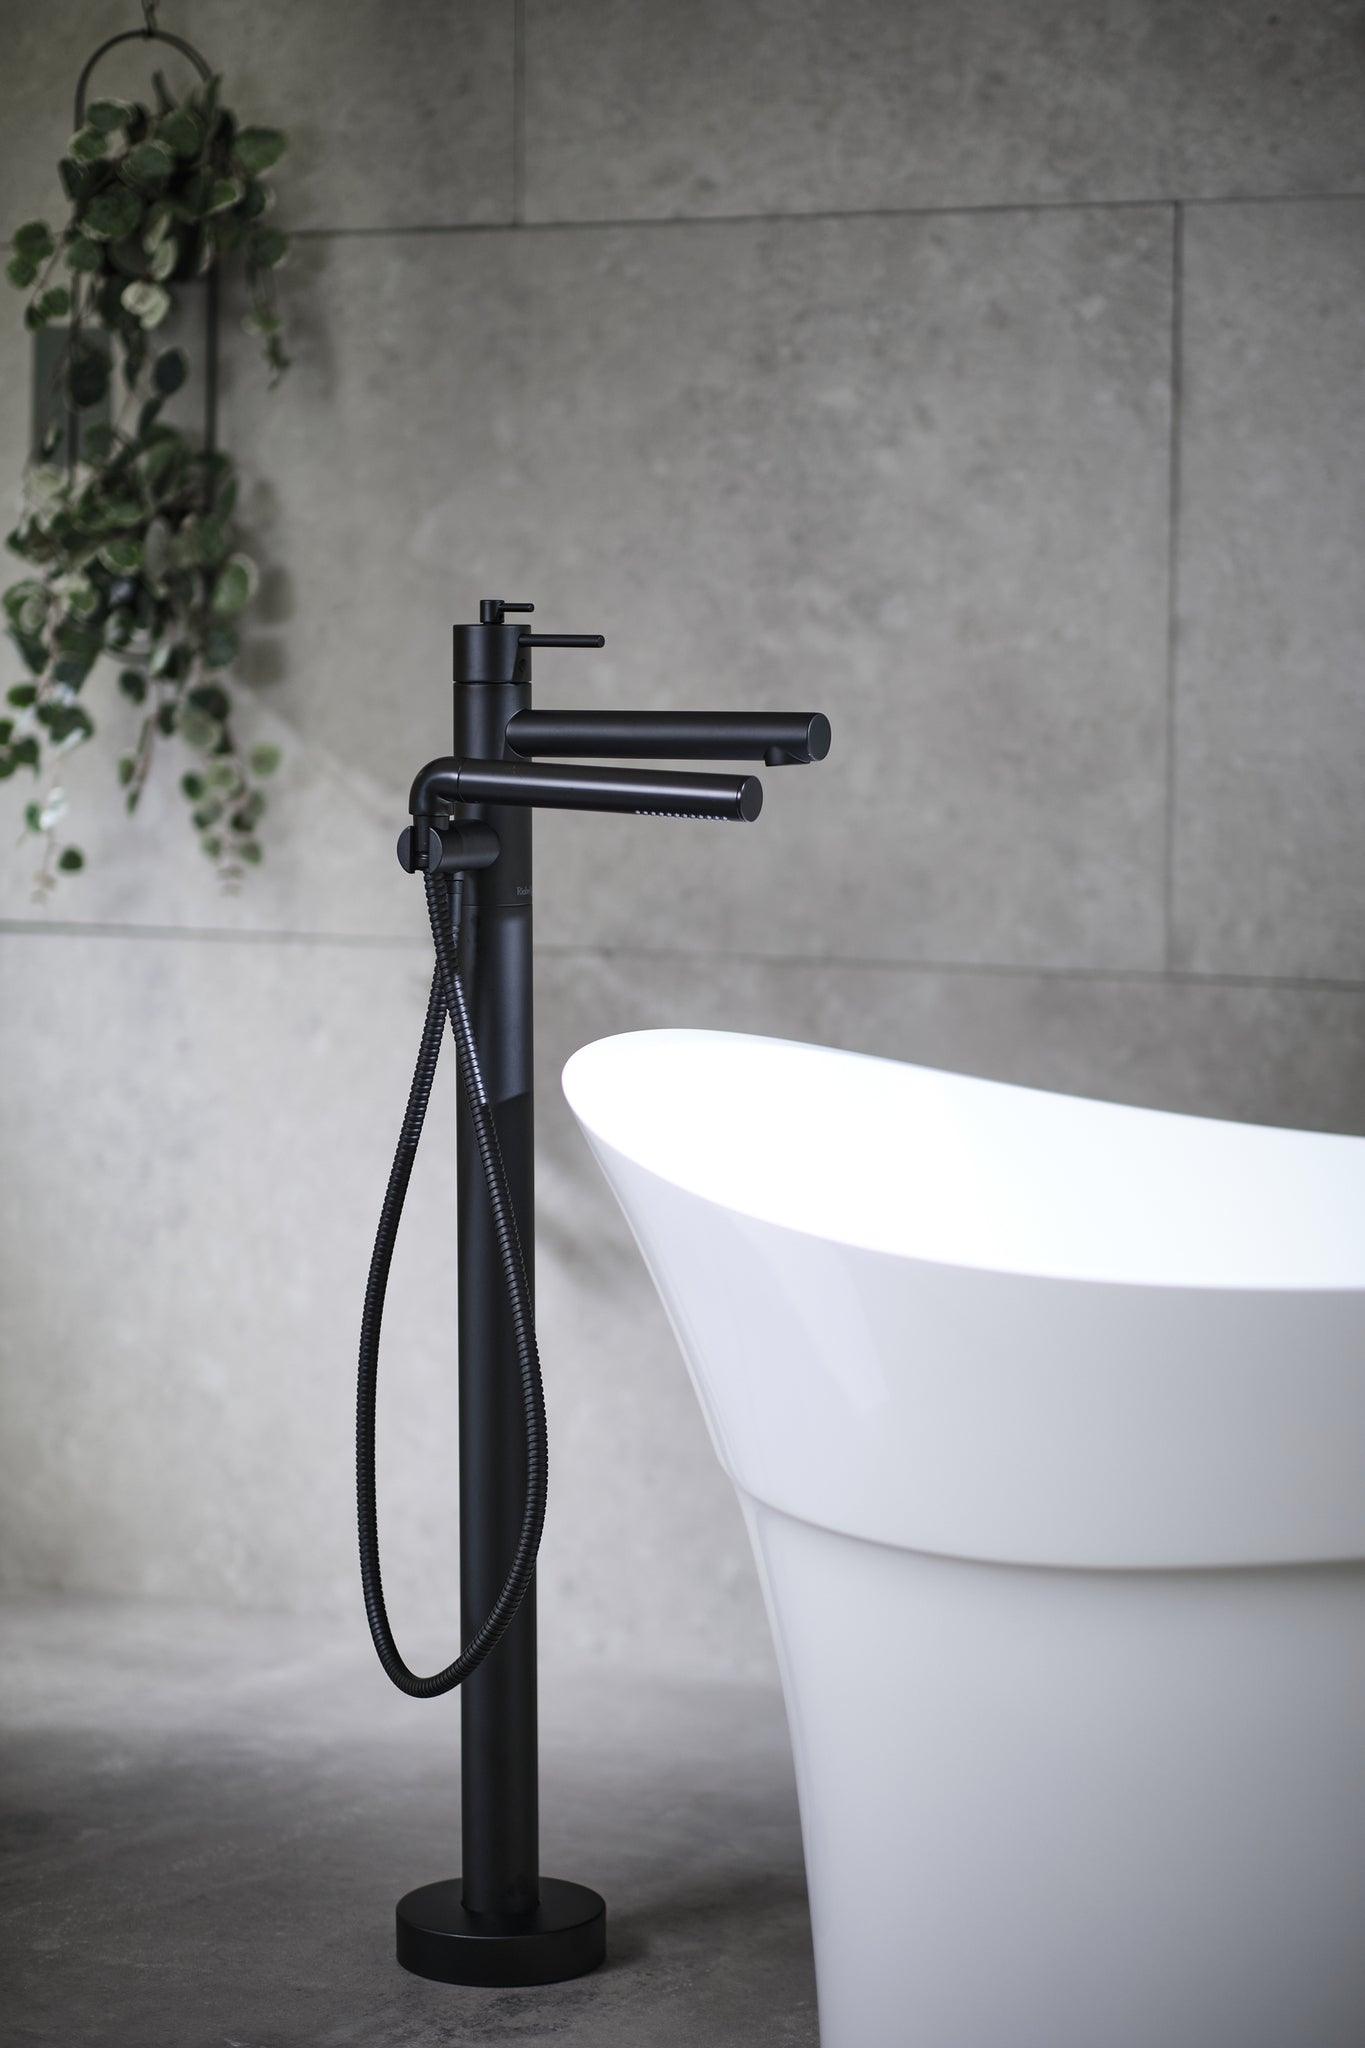 GS Freestanding Bath Shower Mixer - Bilden Home & Hardware Market